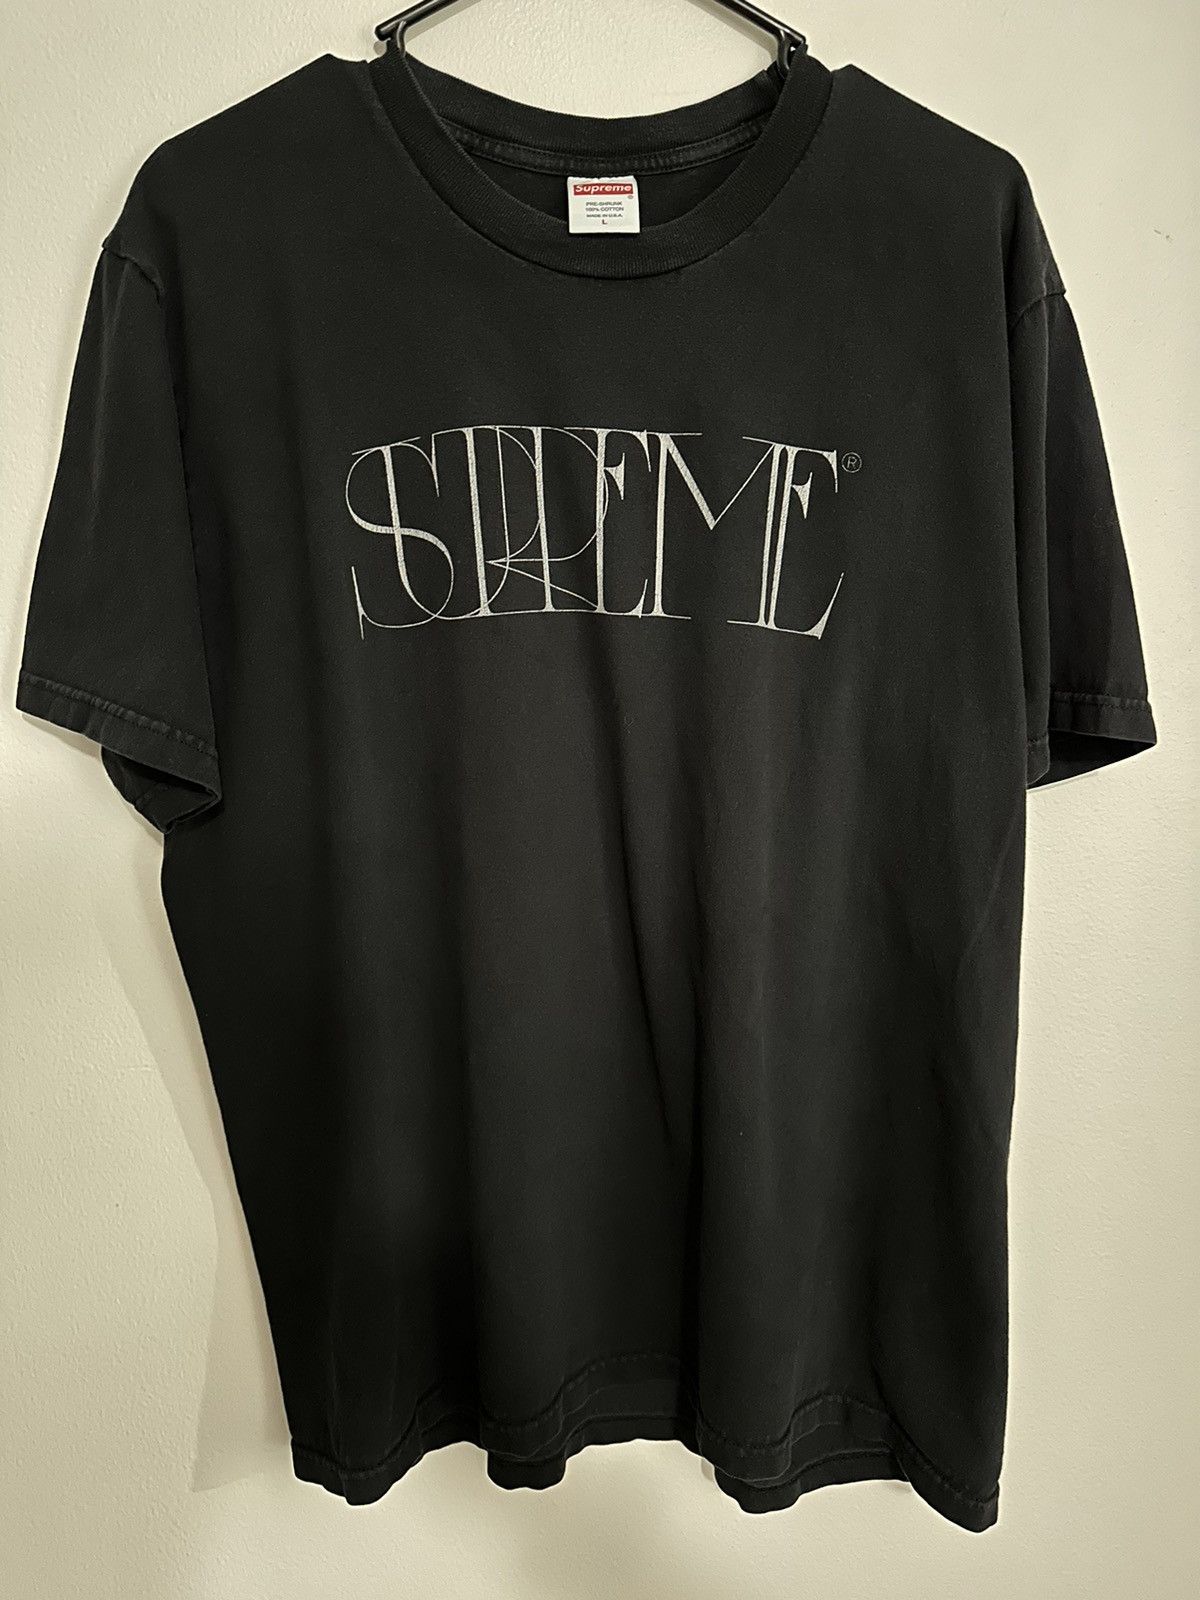 Supreme Trademark T Shirt | Grailed